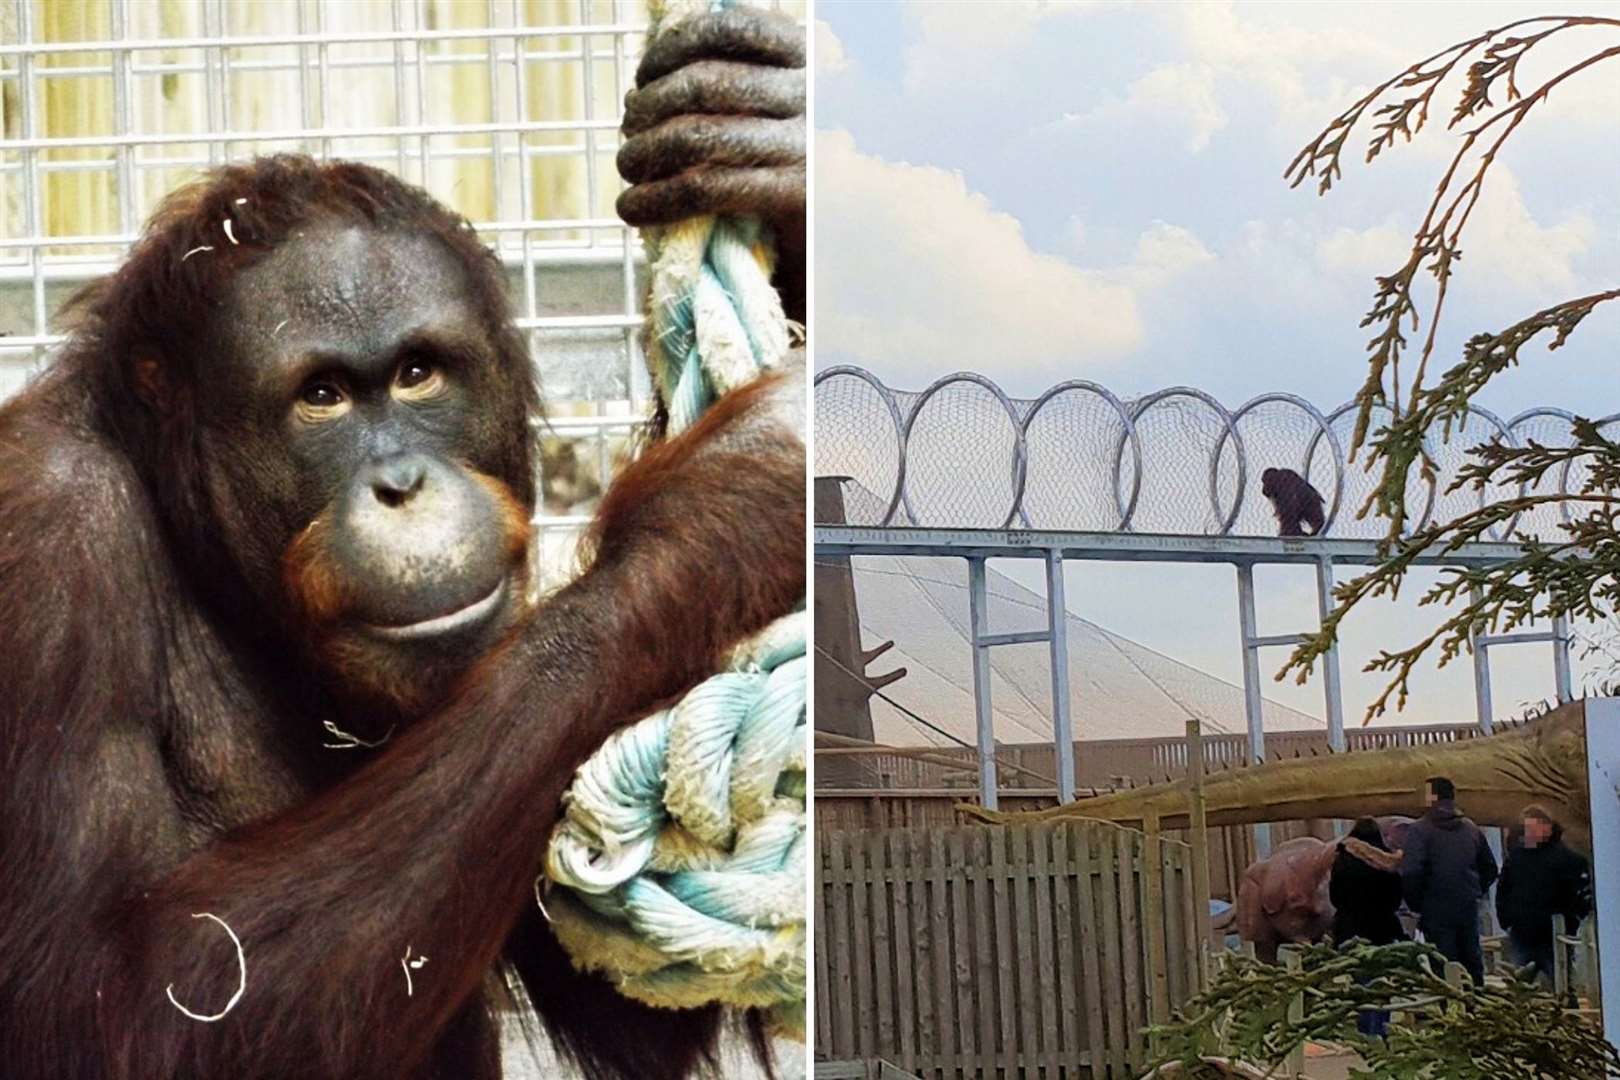 Wingham Wildlife Park has a new orangutan enclosure